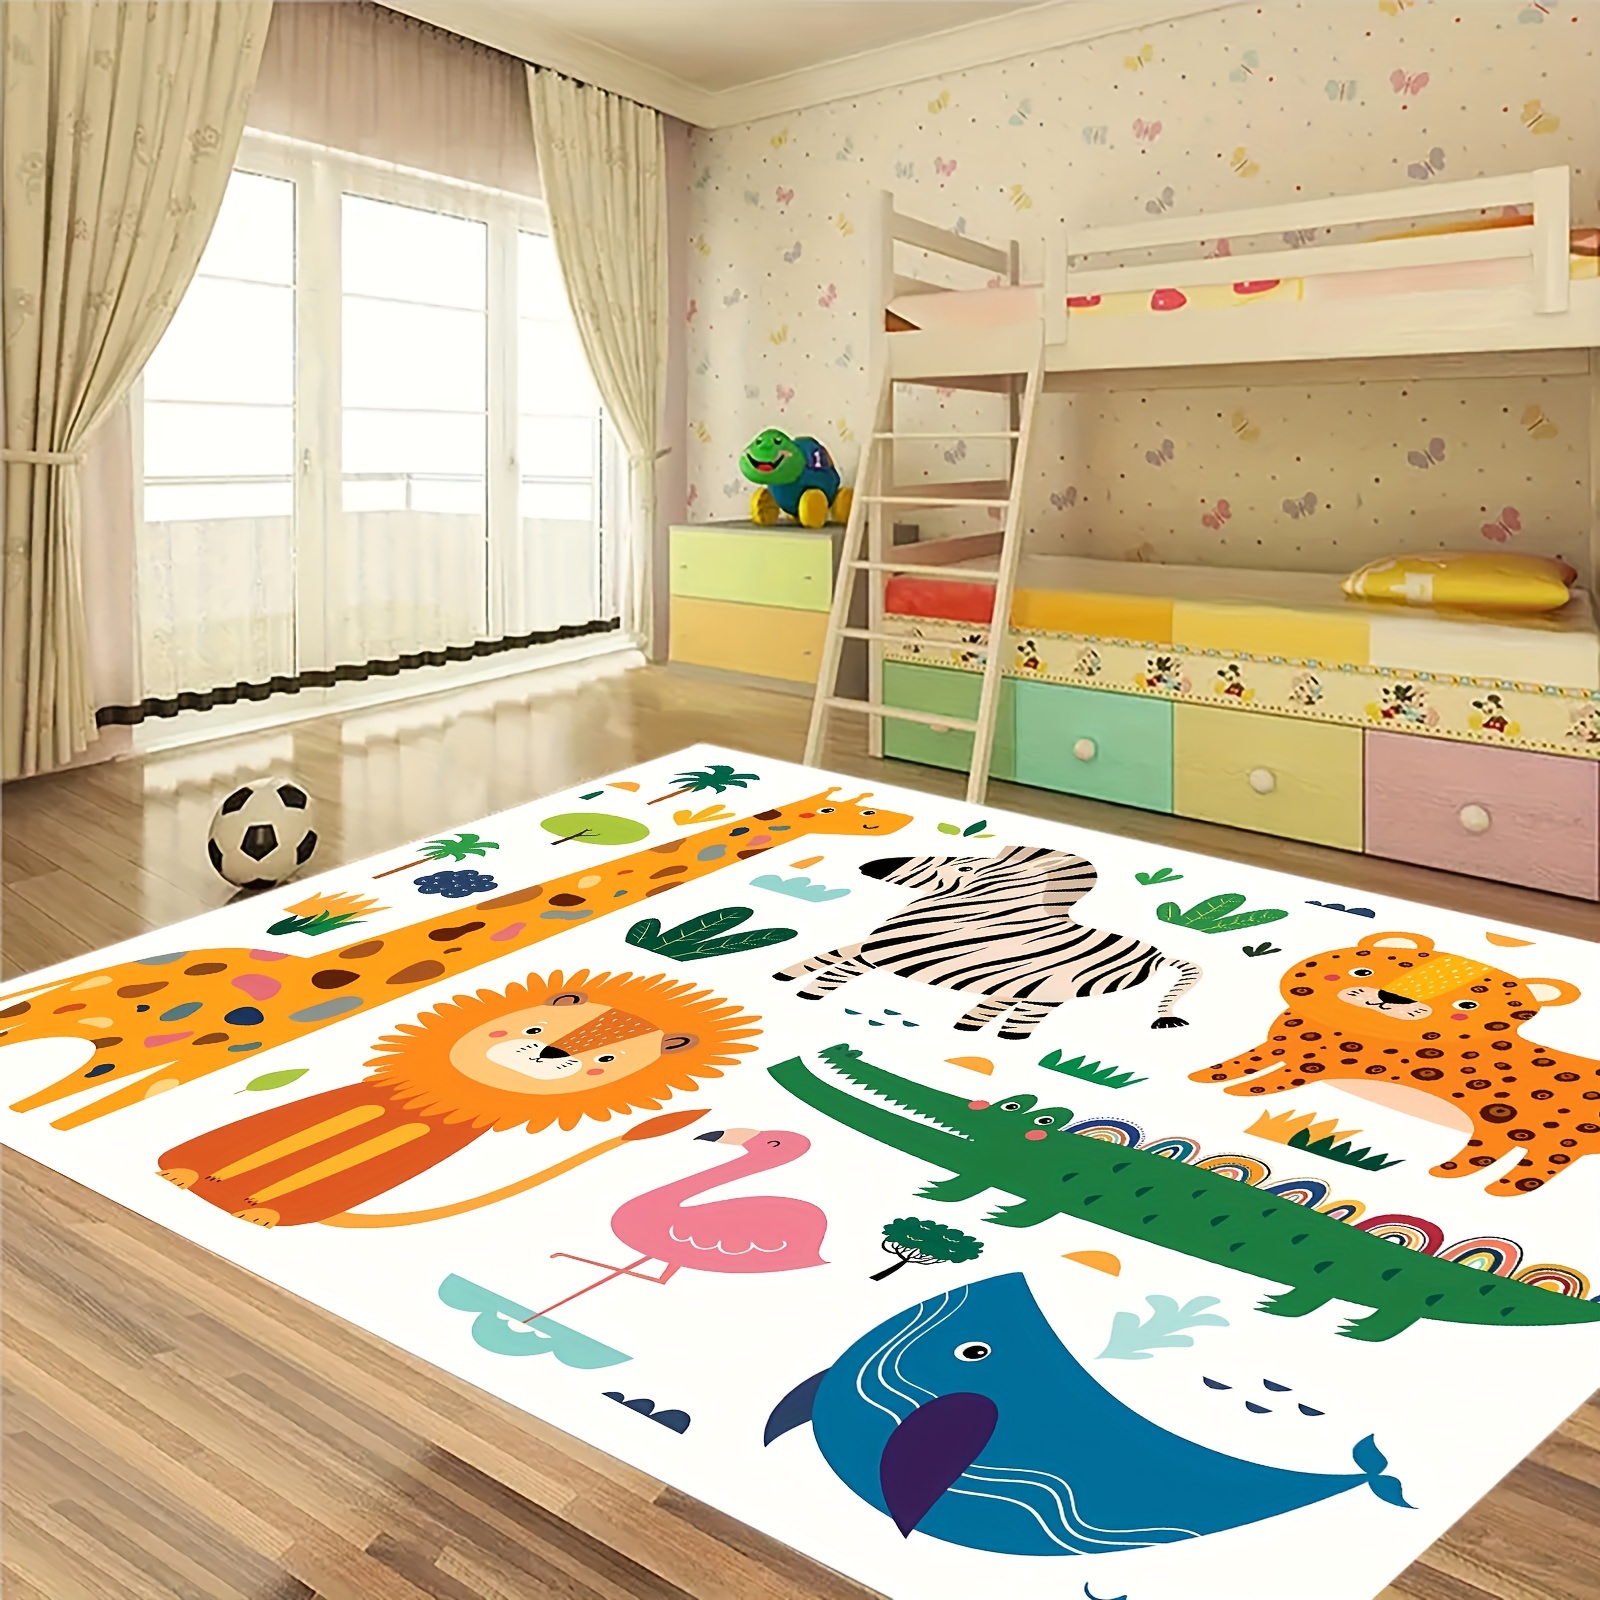 

1pc Kids Room Jungle Safari Area Rug, Non-slip Floor Mat With Lion, Giraffe, Zebra For Playroom, Bedroom, Living Room, Kitchen, Entryway, Bathroom, Home Decor